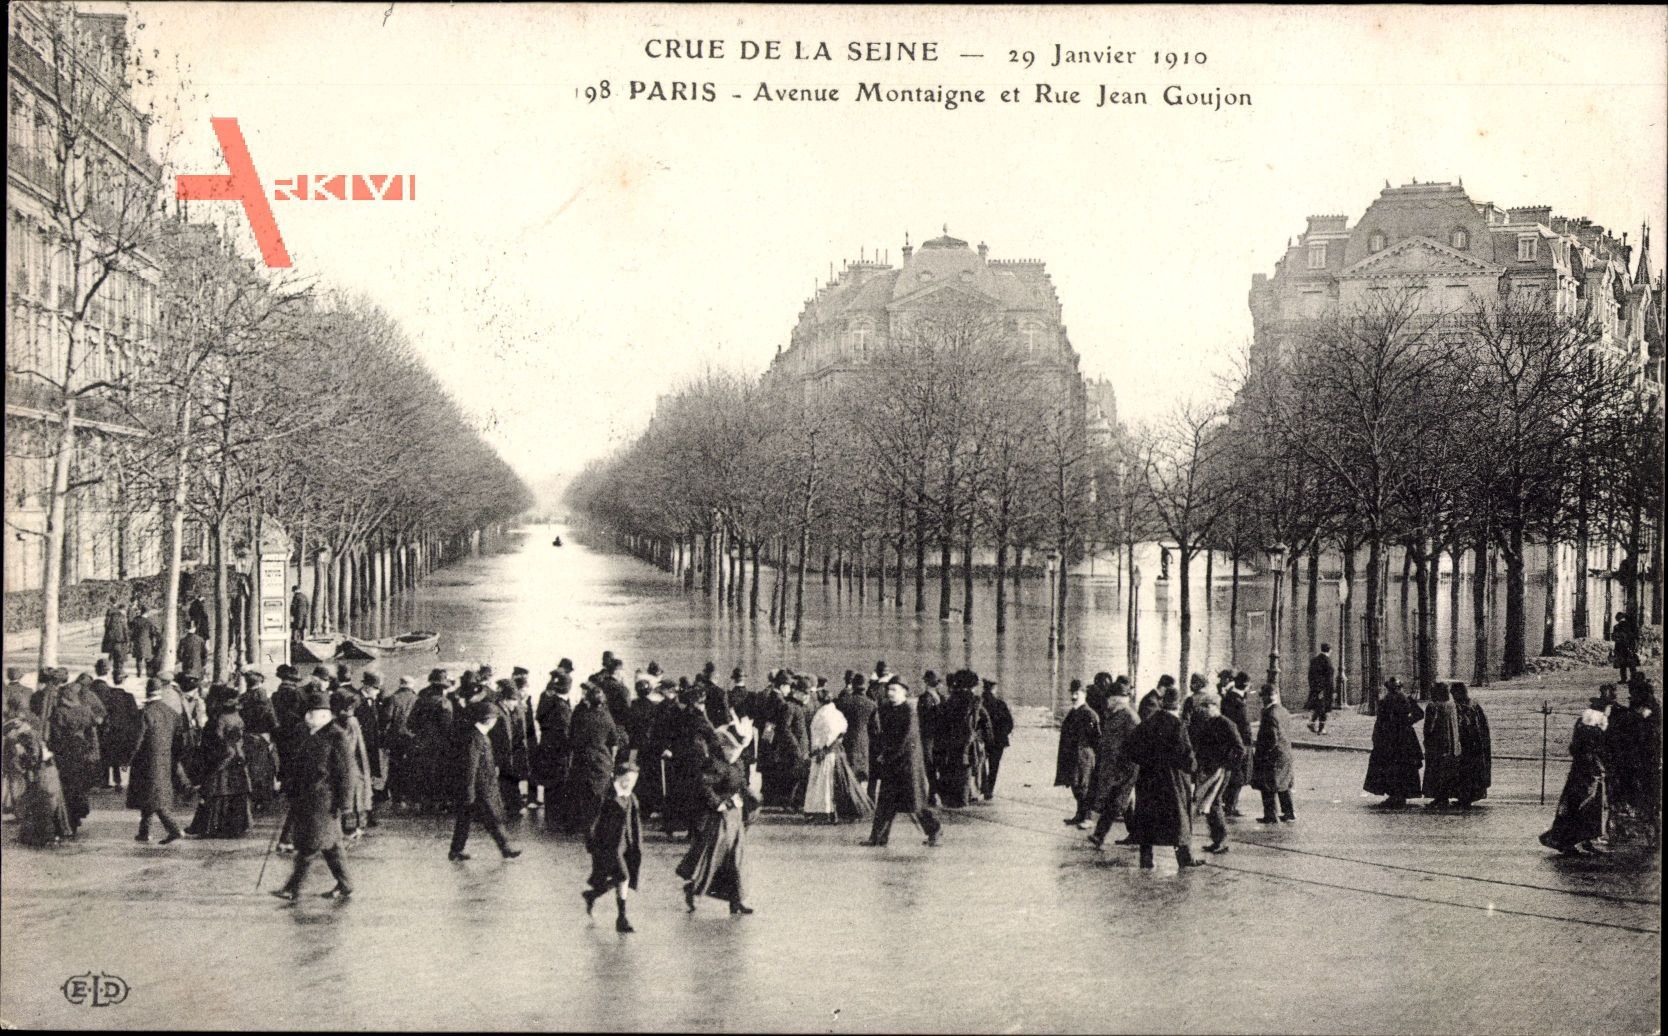 Paris, Crue de la Seine 19 Janvier 1910, Avenue Montaigne, Rue Jean Goujon